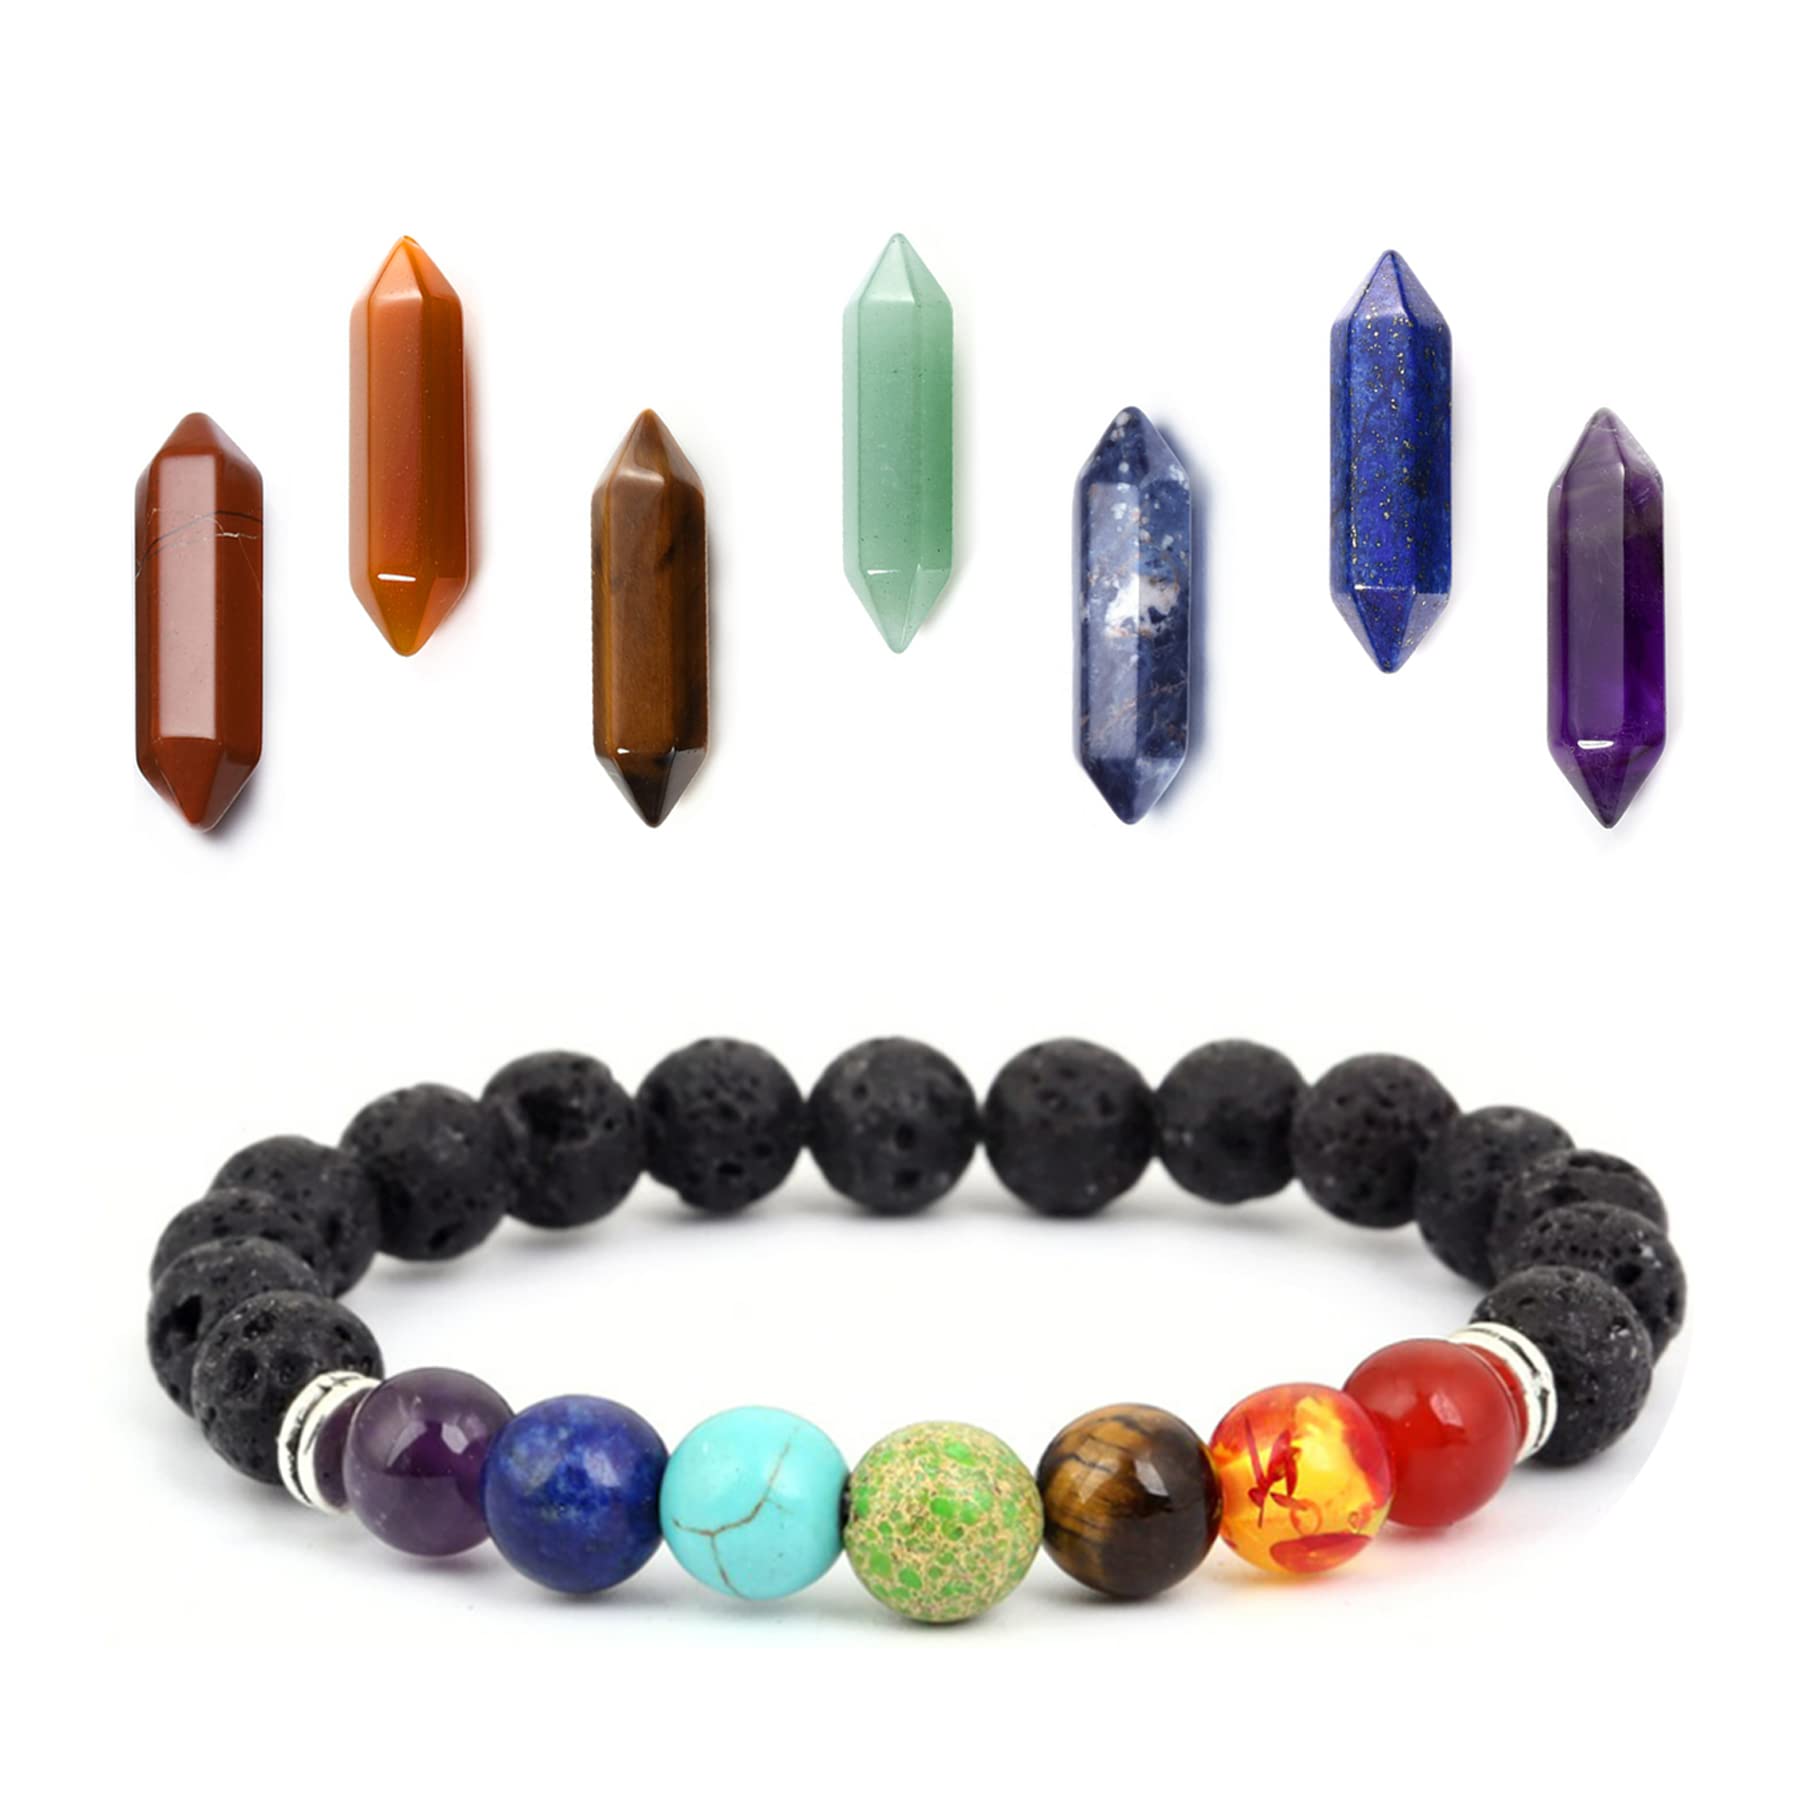 8Pcs Crystals and Healing Stones, Healing Crystals Bracelet, Full